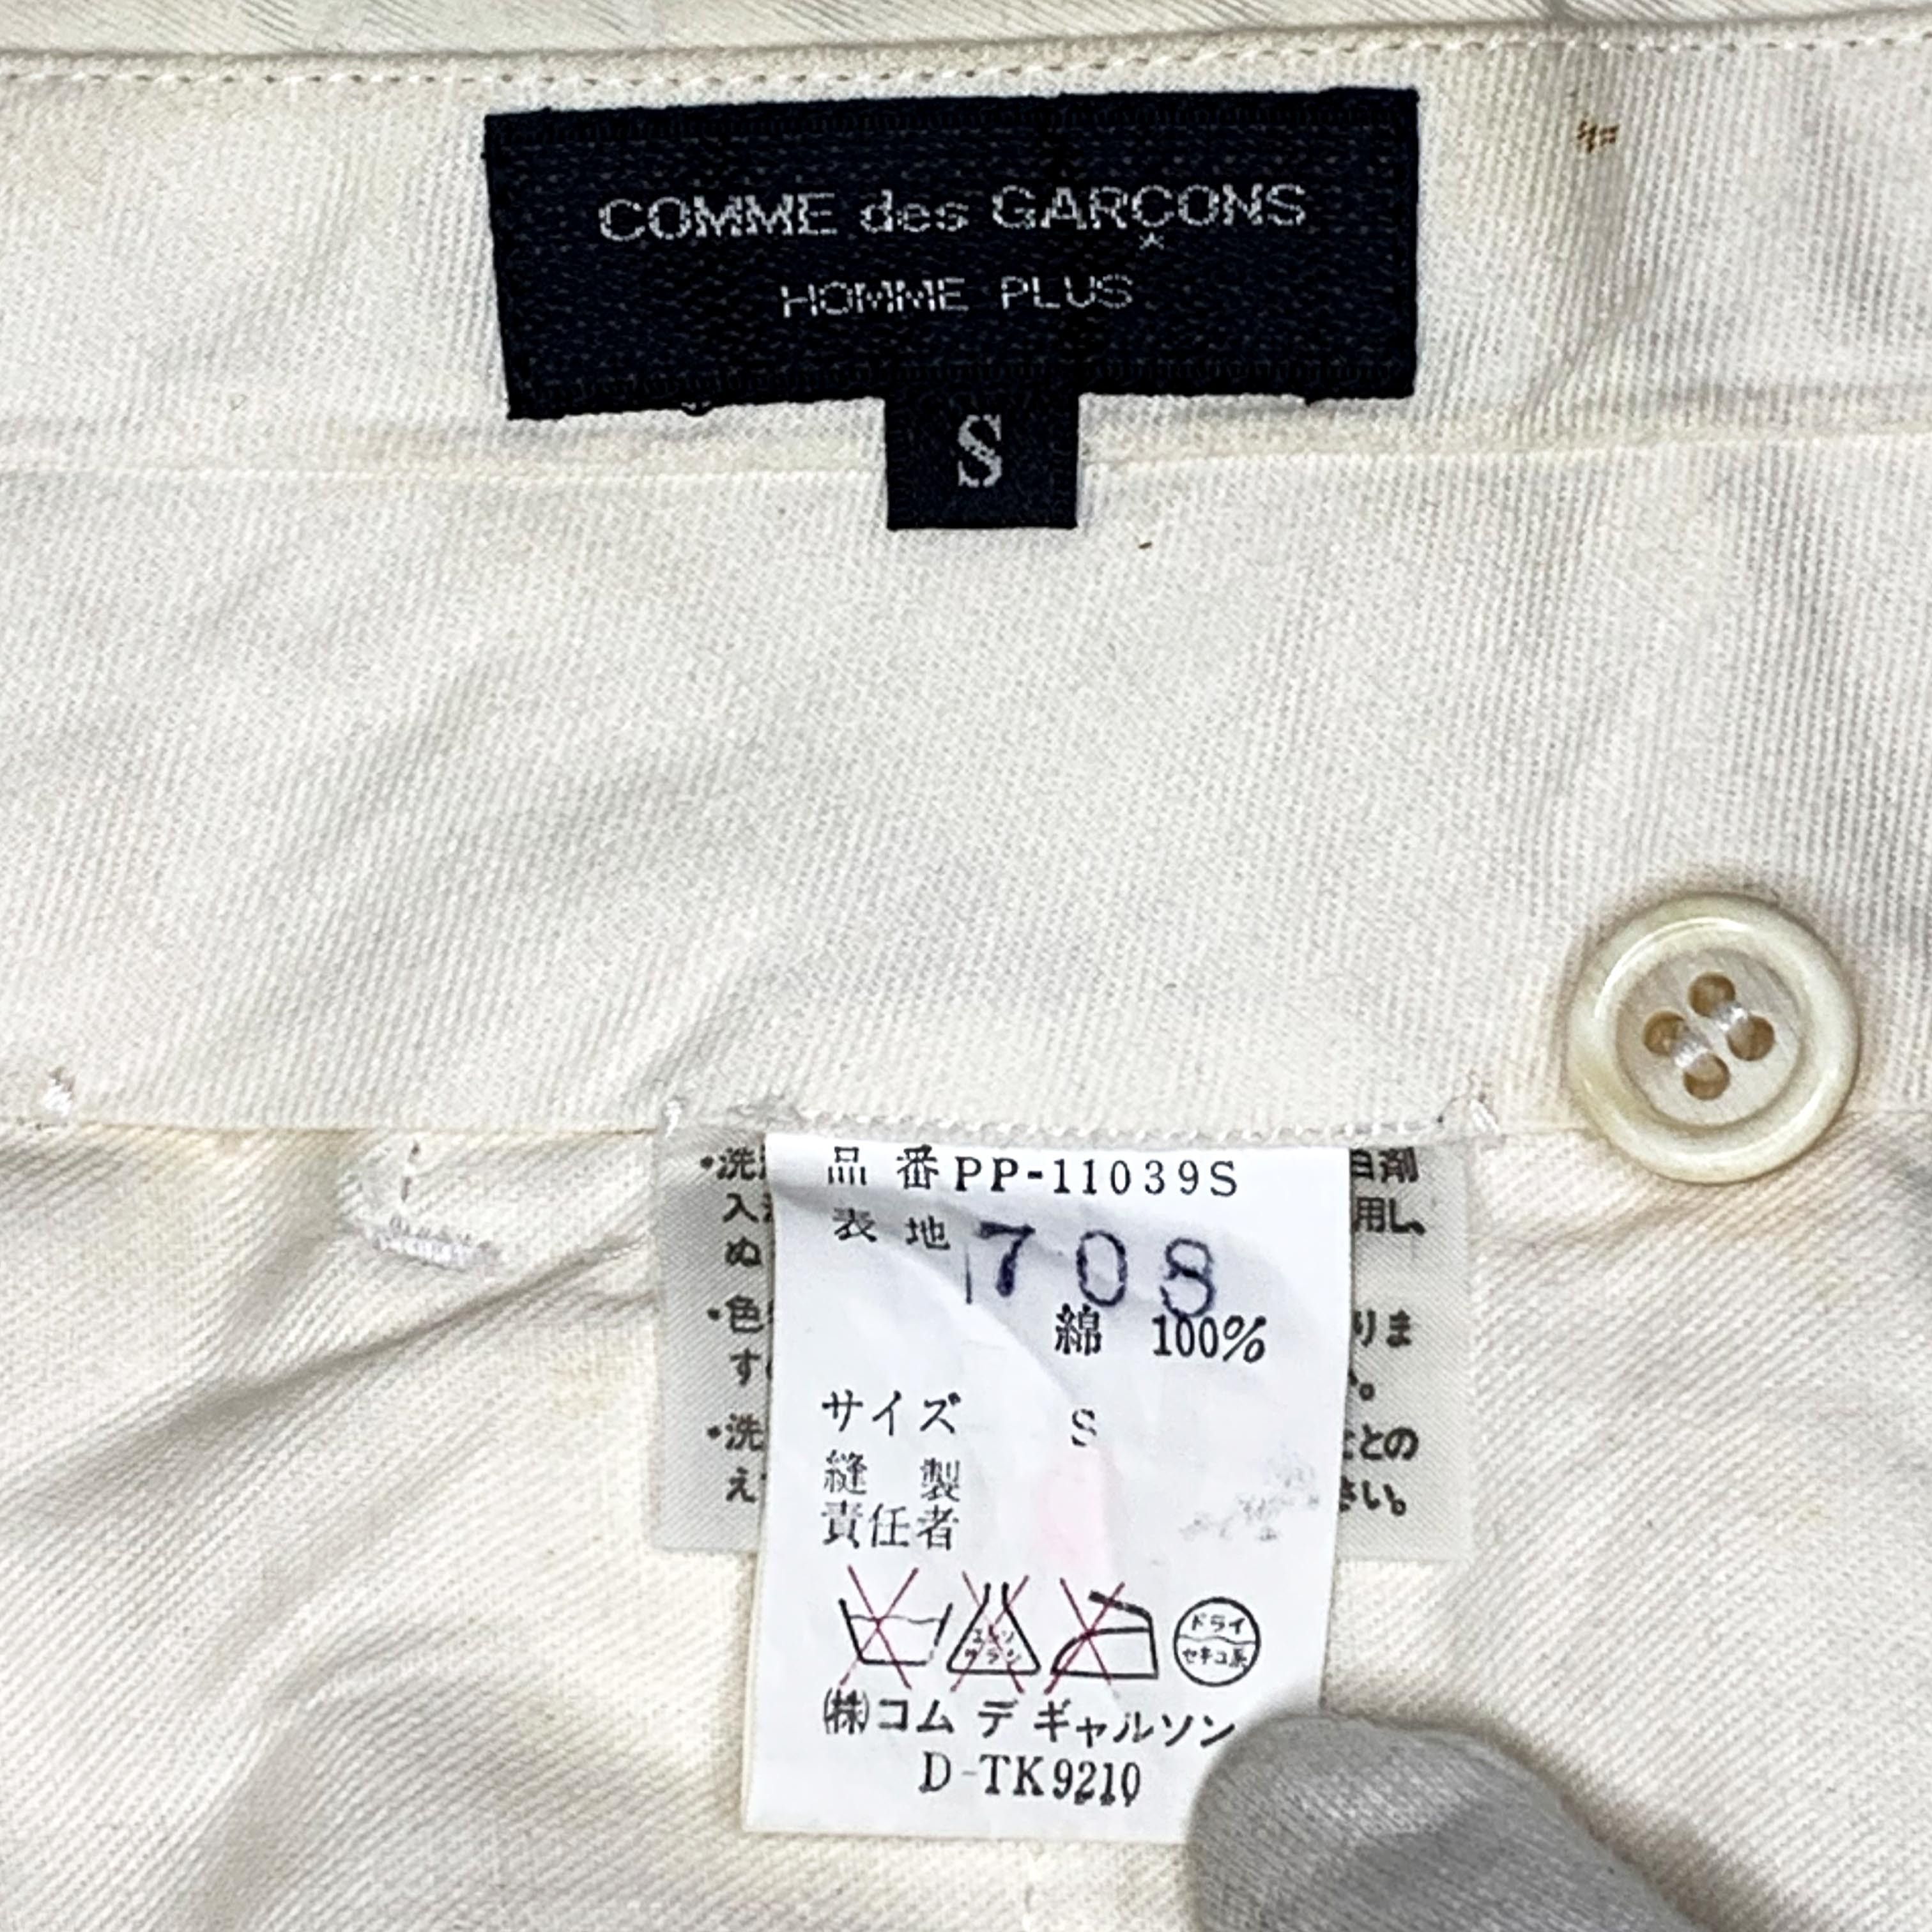 SS87 Cotton Pants - 4